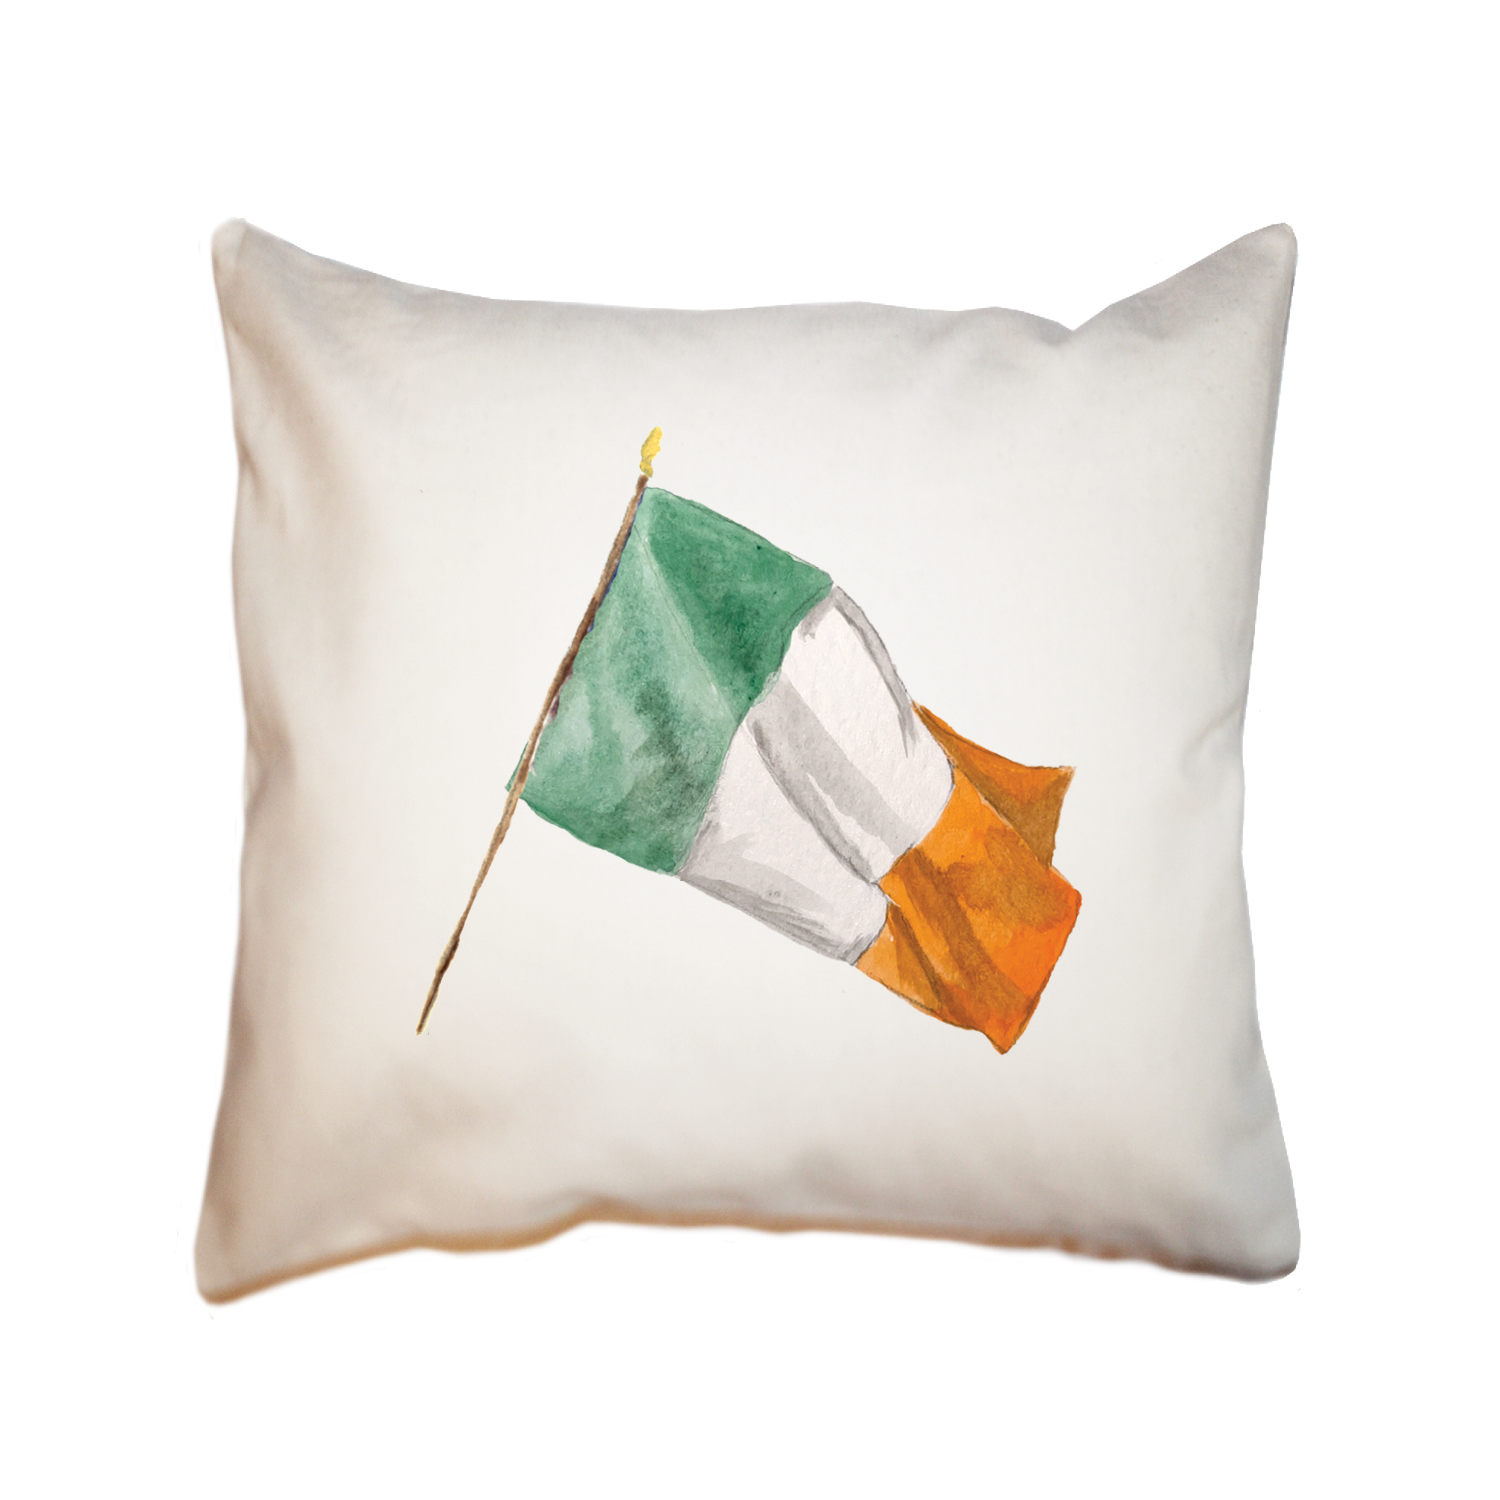 ireland flag square pillow